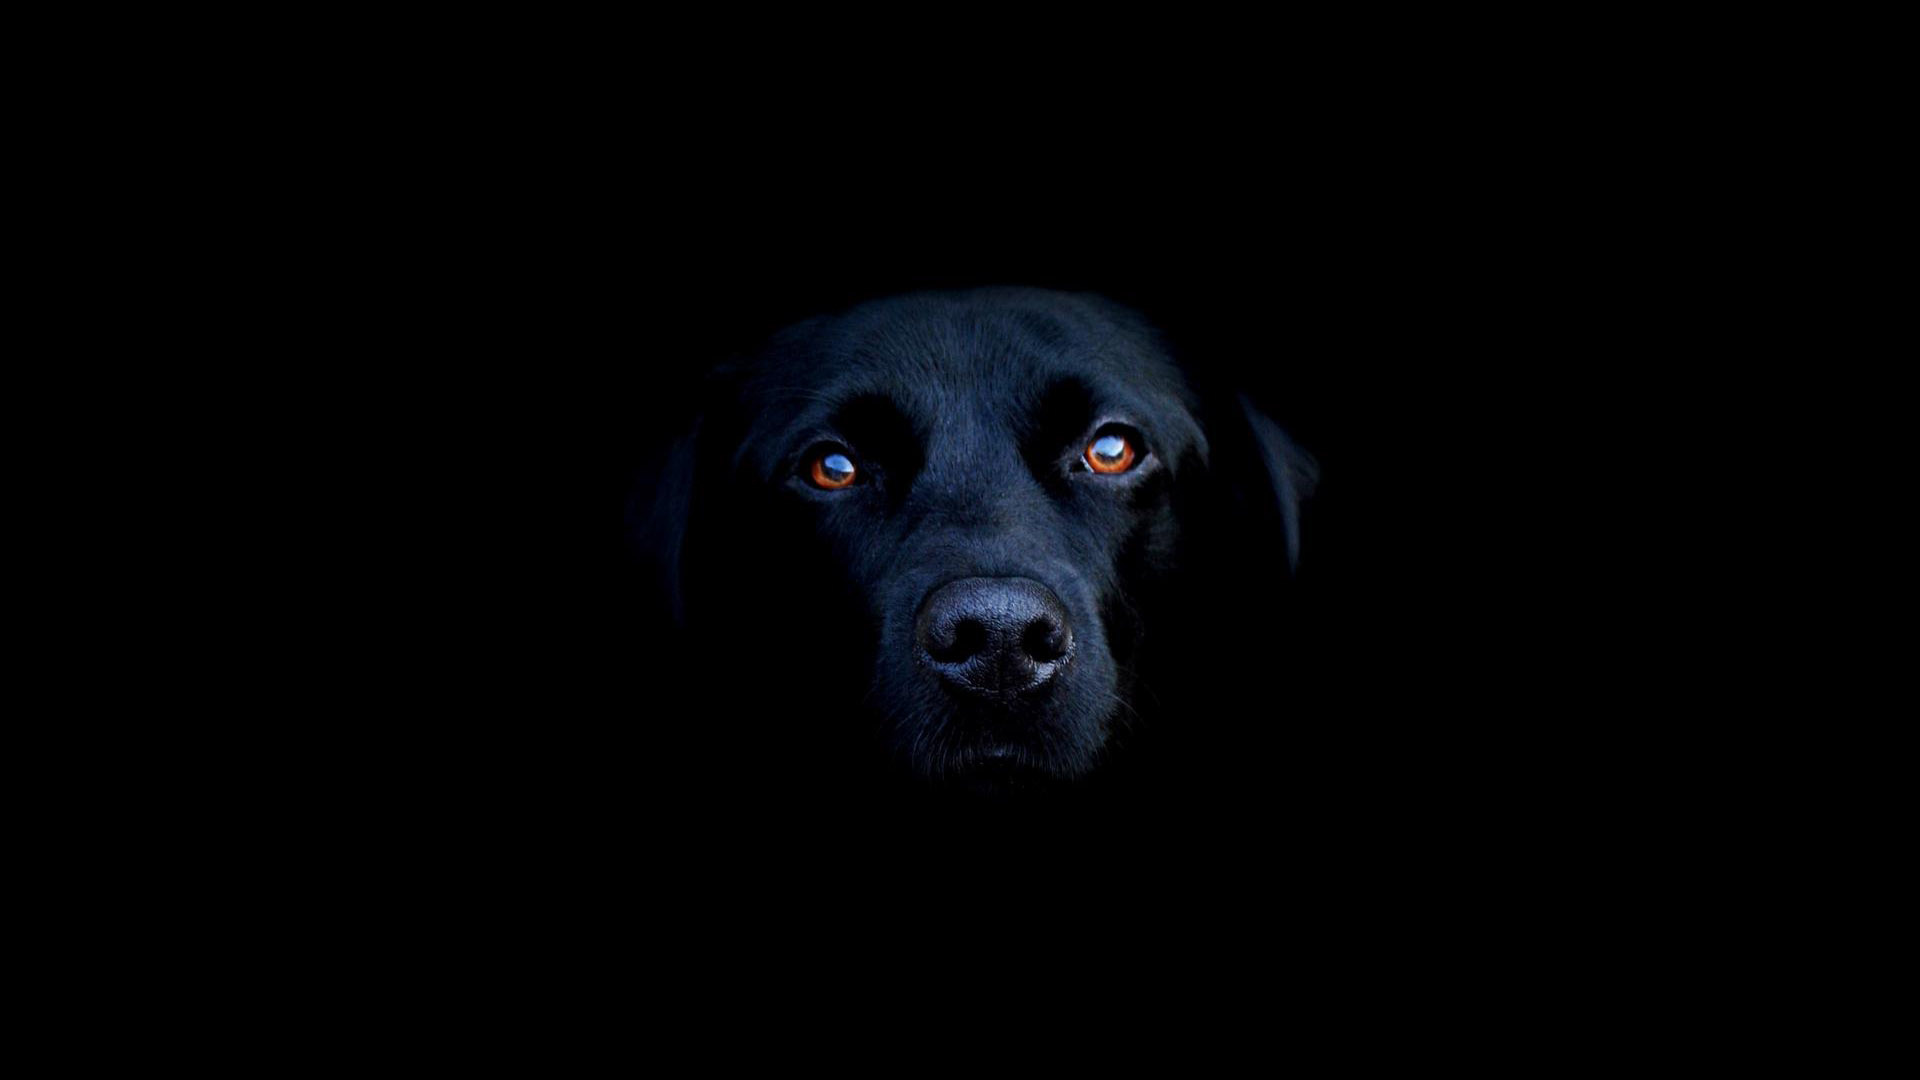 Black labrador charm, Wallpaper wonder, Canine beauty, Mesmerizing images, 1920x1080 Full HD Desktop